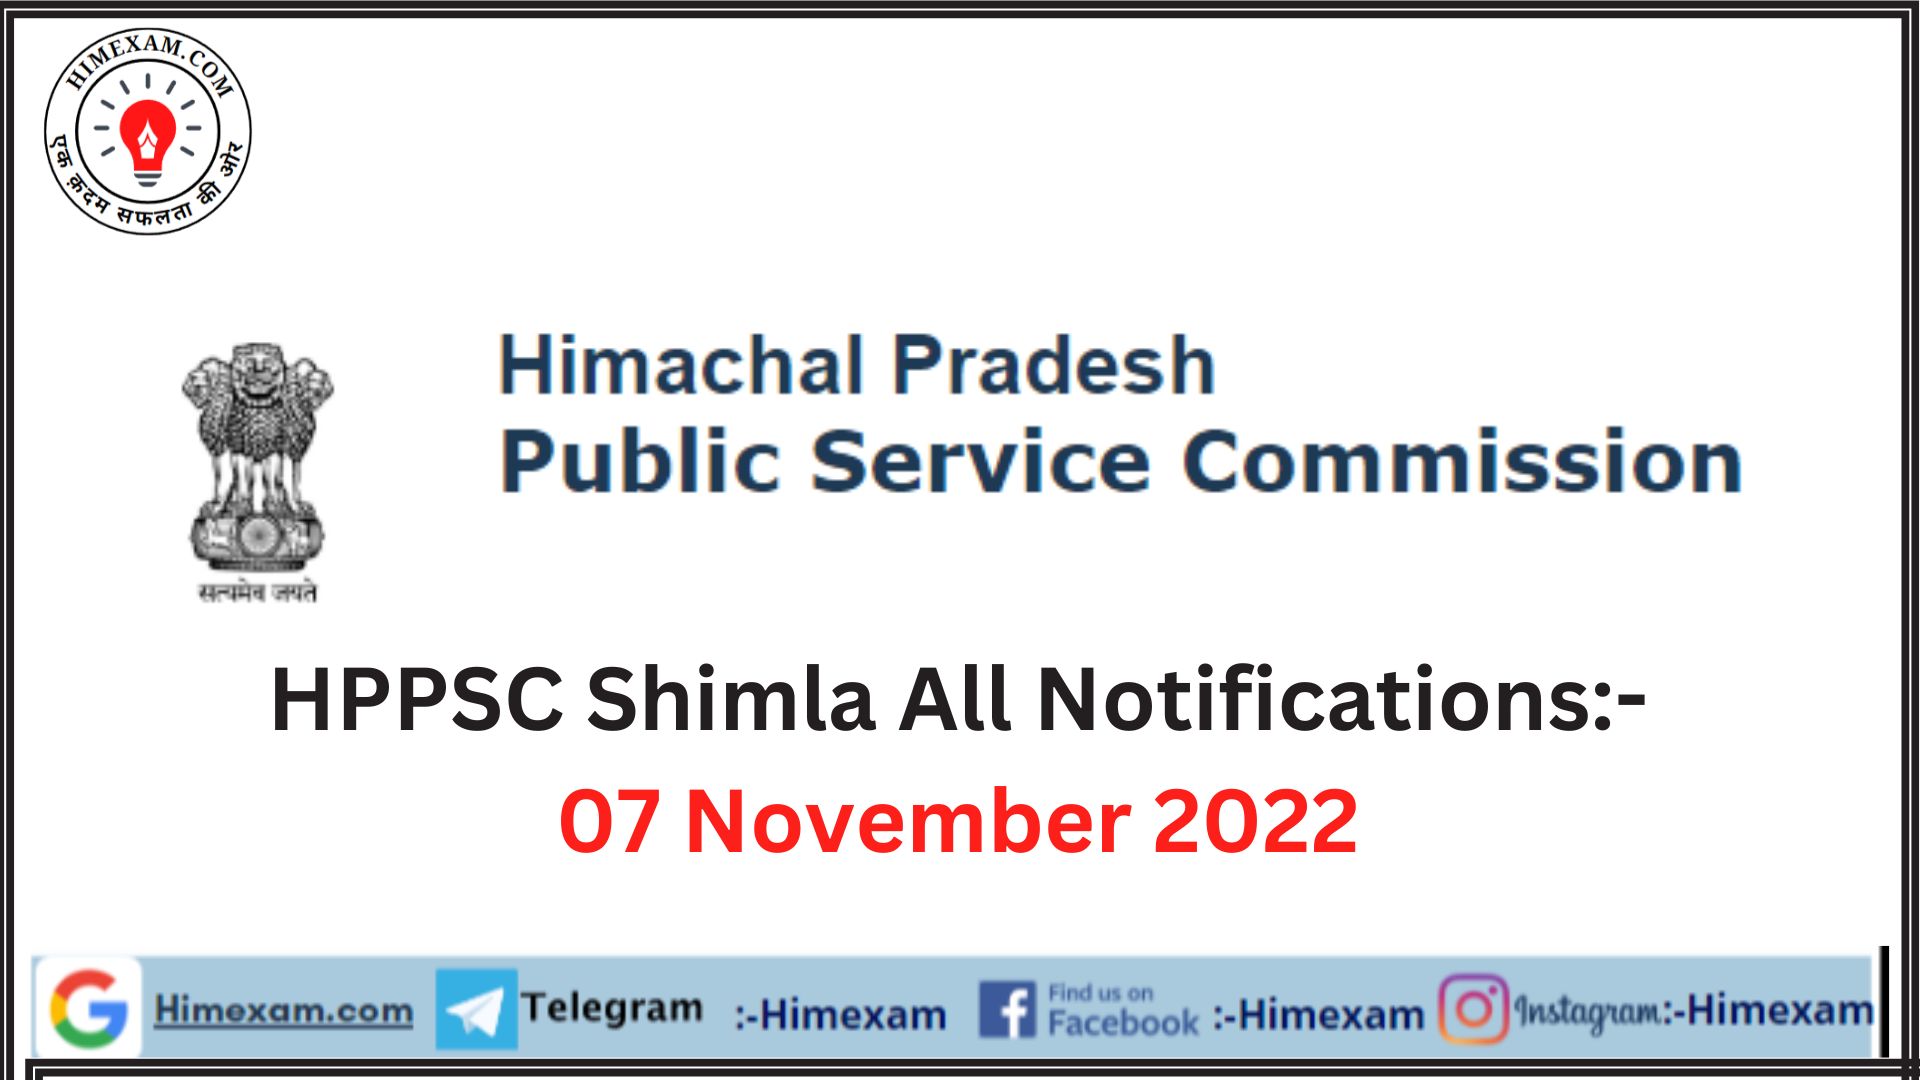 HPPSC Shimla All Notifications:- 07 November 2022